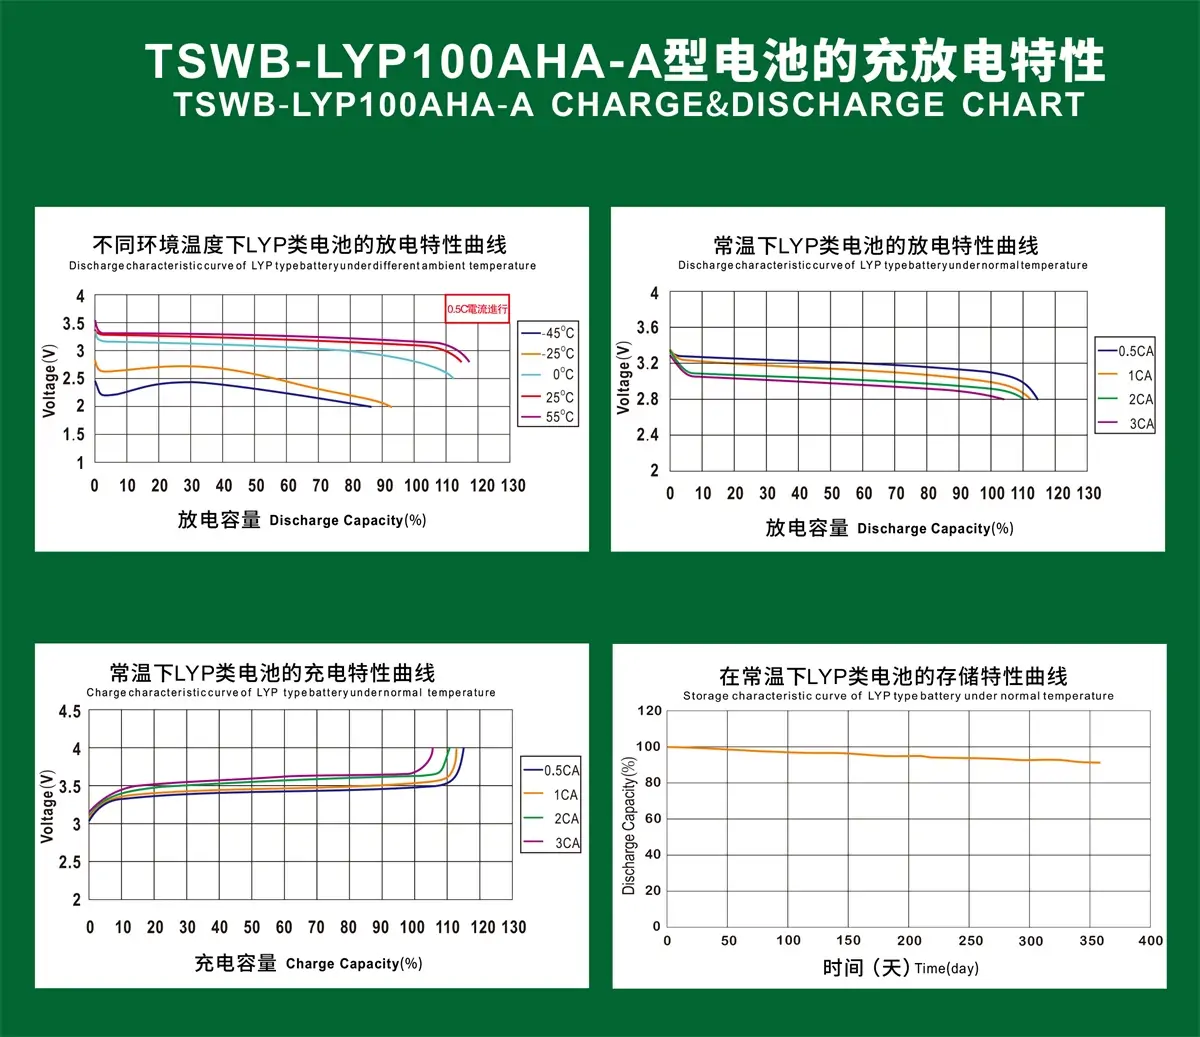 TSWB-LYP100AHA-A CHARGE&DISCHARGE CHART